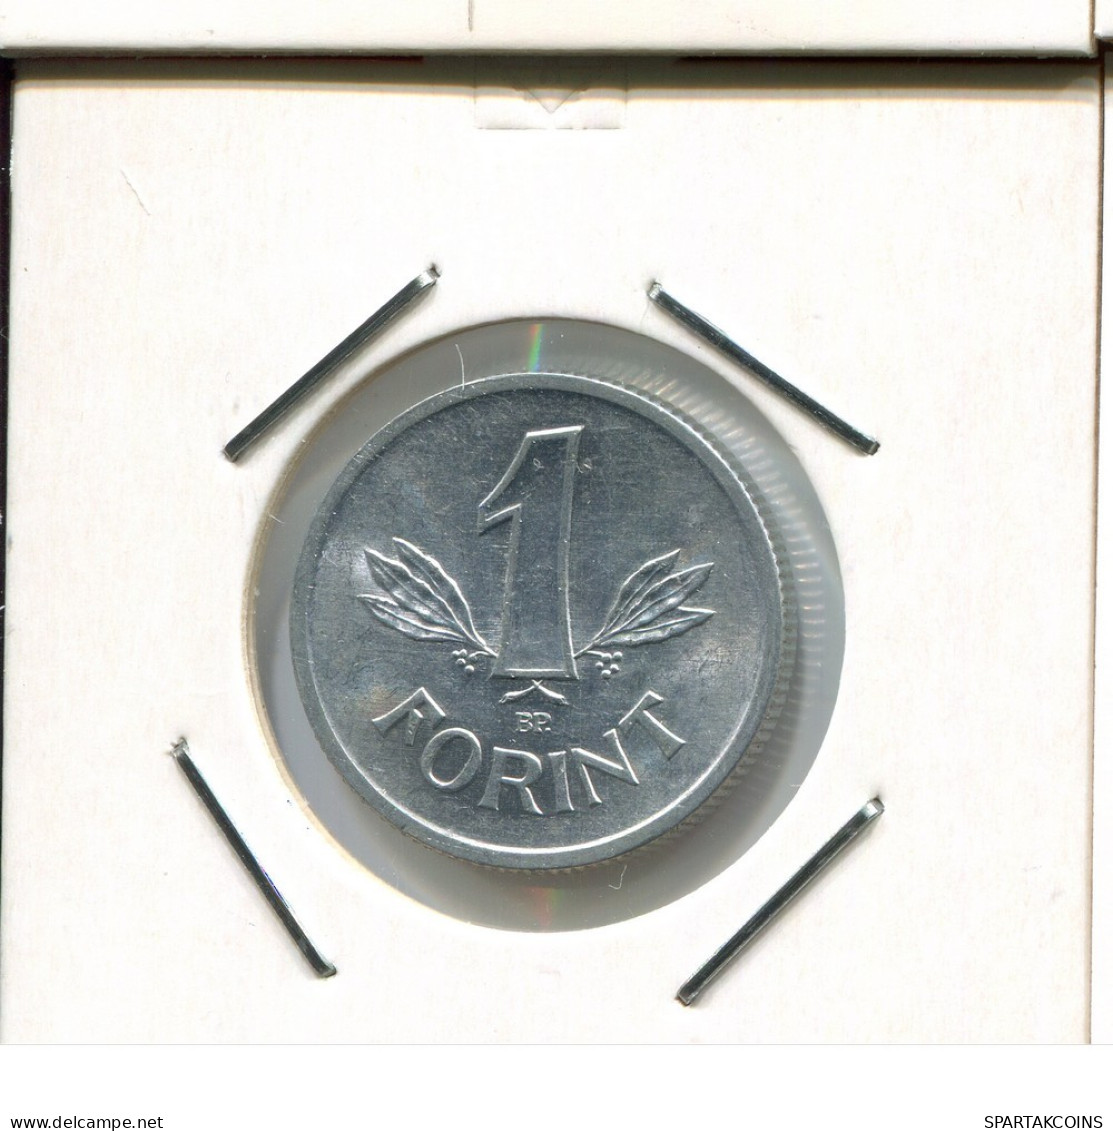 1 FORINT 1989 HUNGARY Coin #AR579.U.A - Ungheria